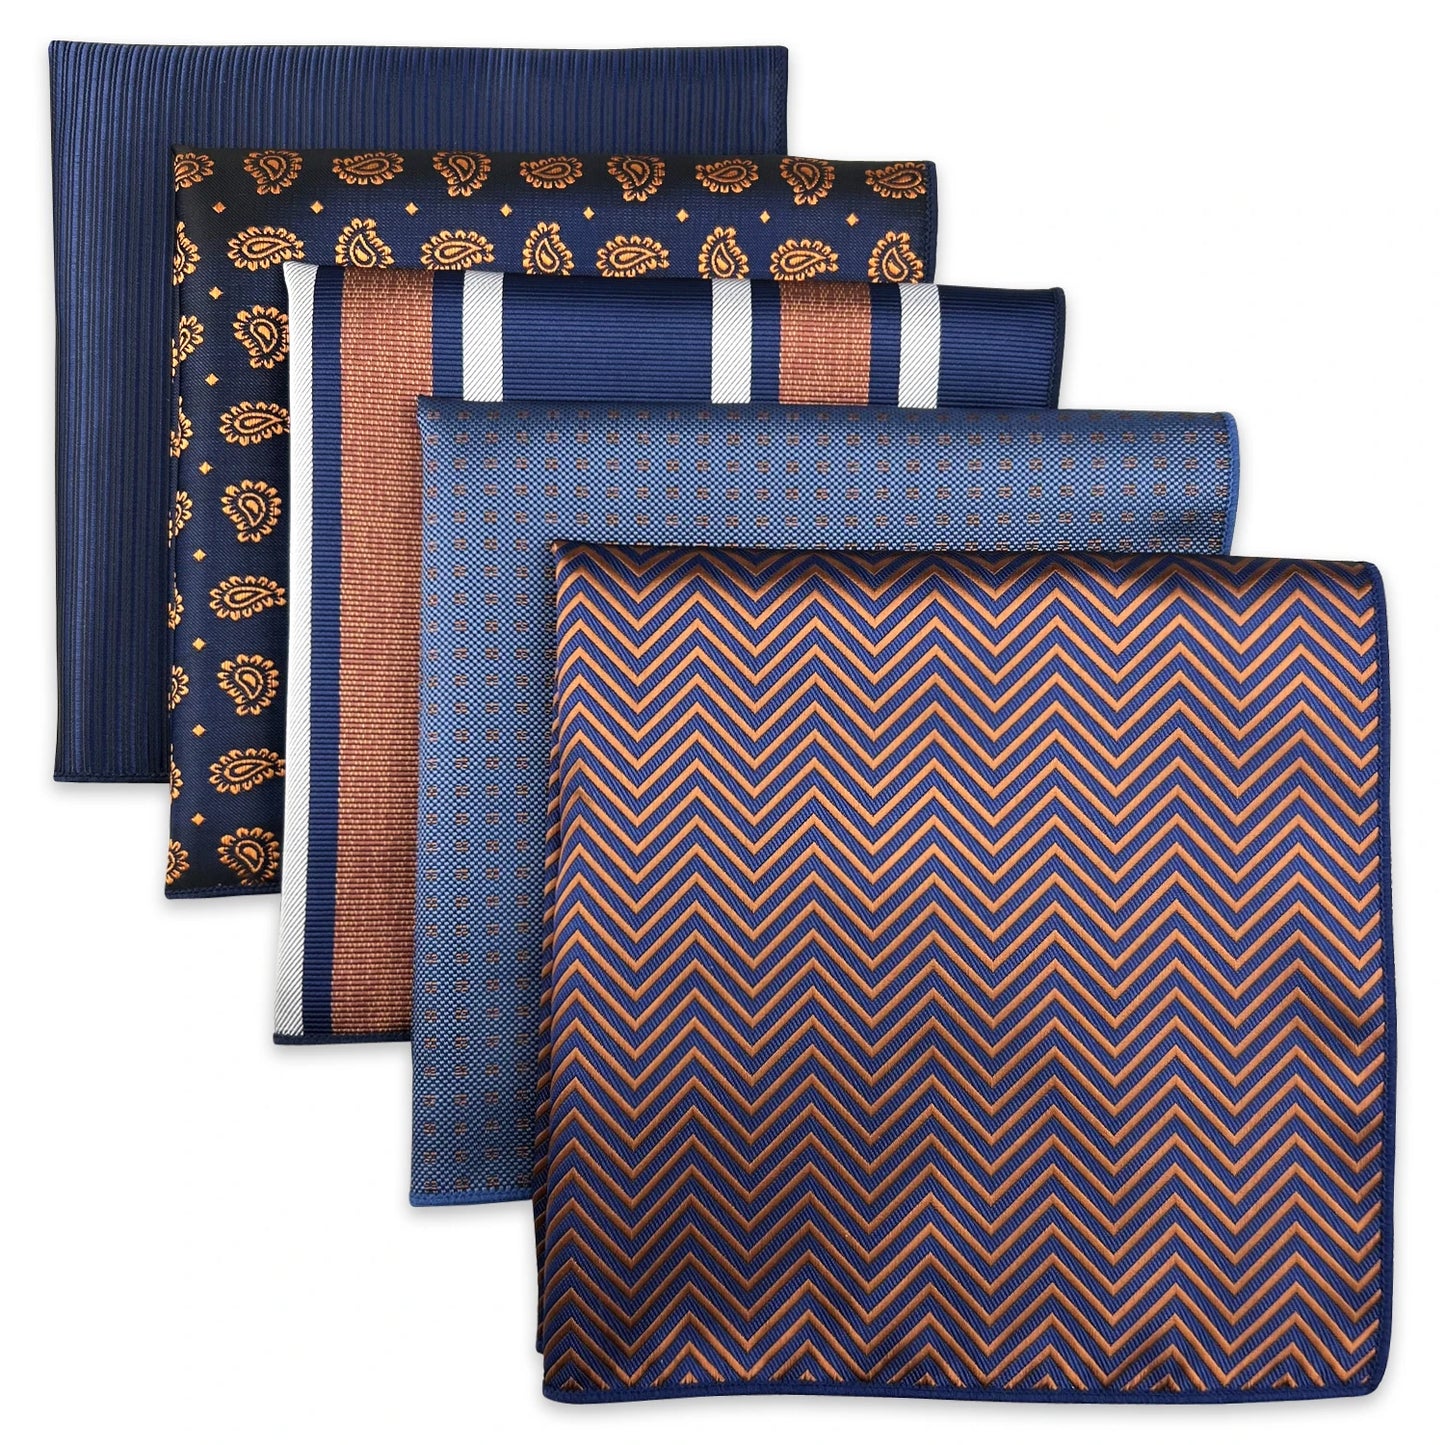 Colorful Assorted Men's Silk Pocket Square Handkerchiefs